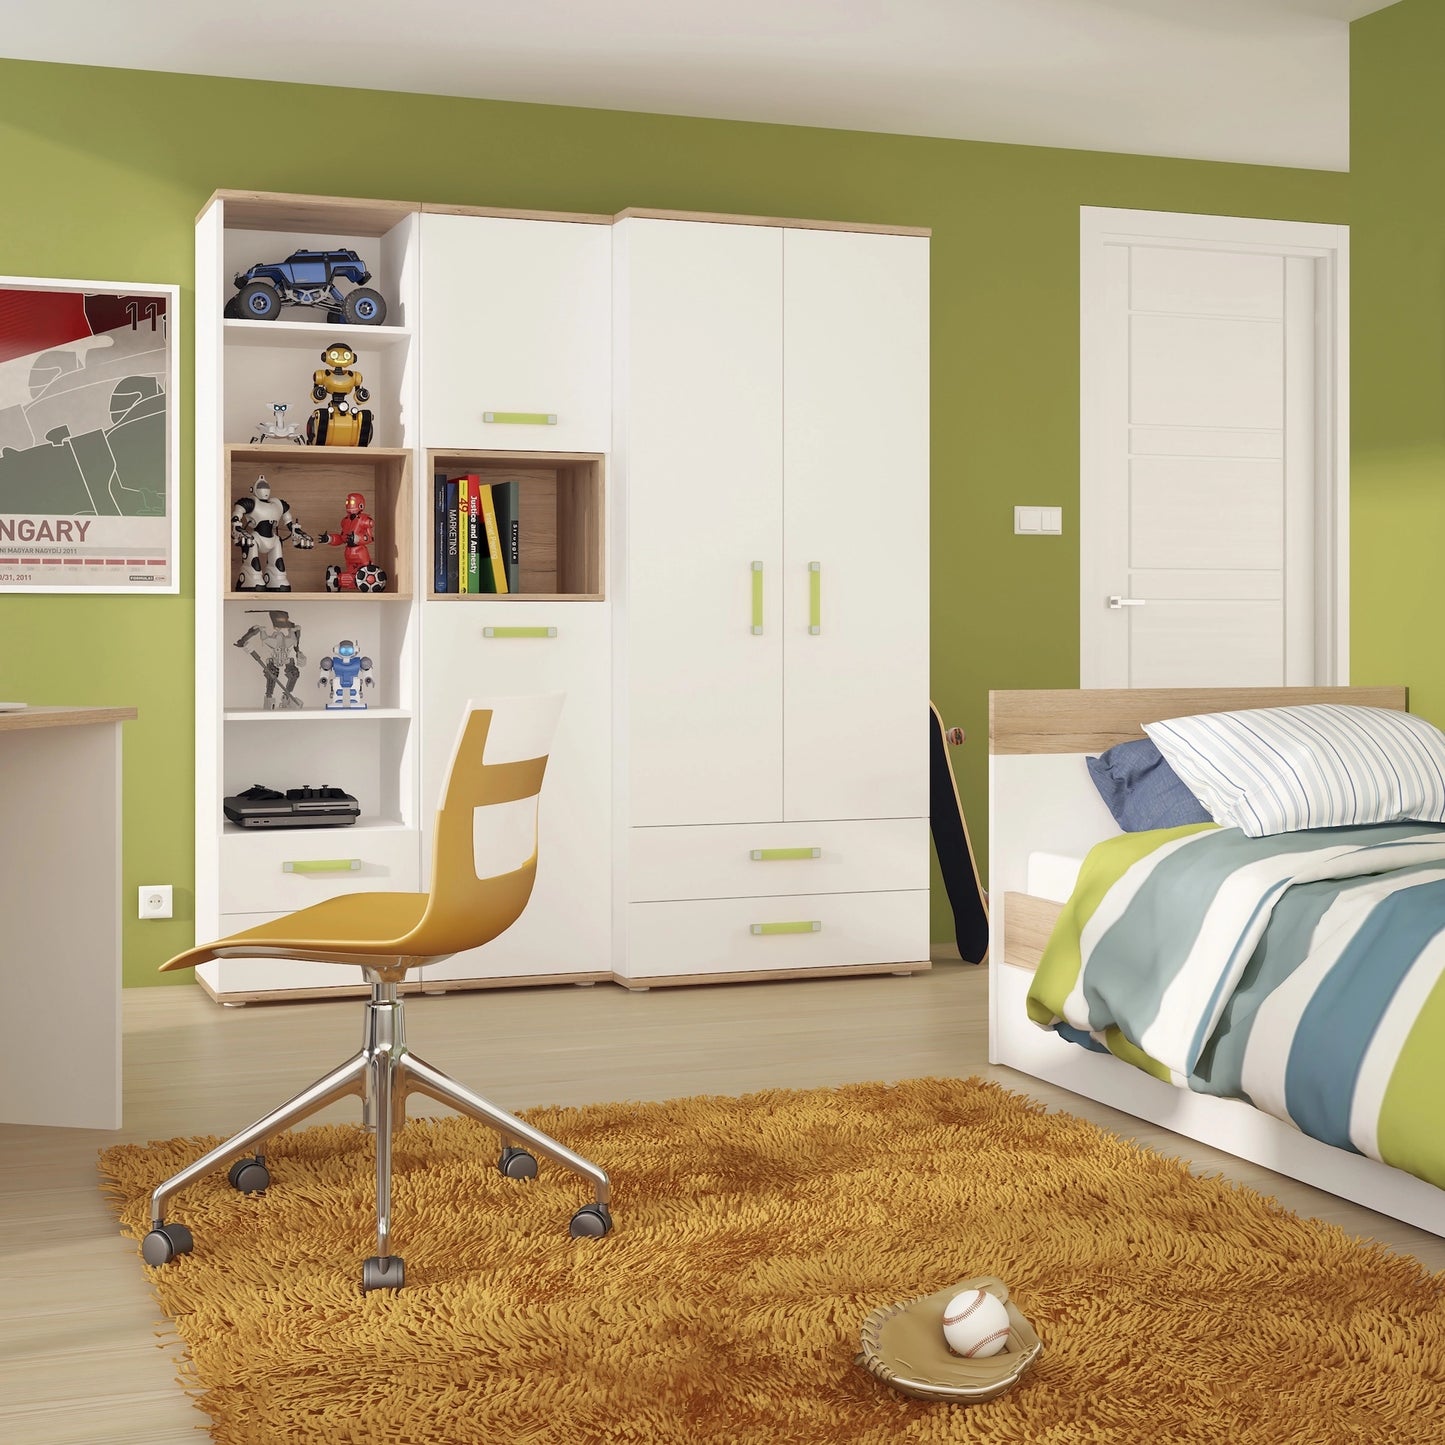 Furniture To Go 4Kids 1 Drawer Bedside Cabinet in Light Oak & White High Gloss (Lemon Handles)